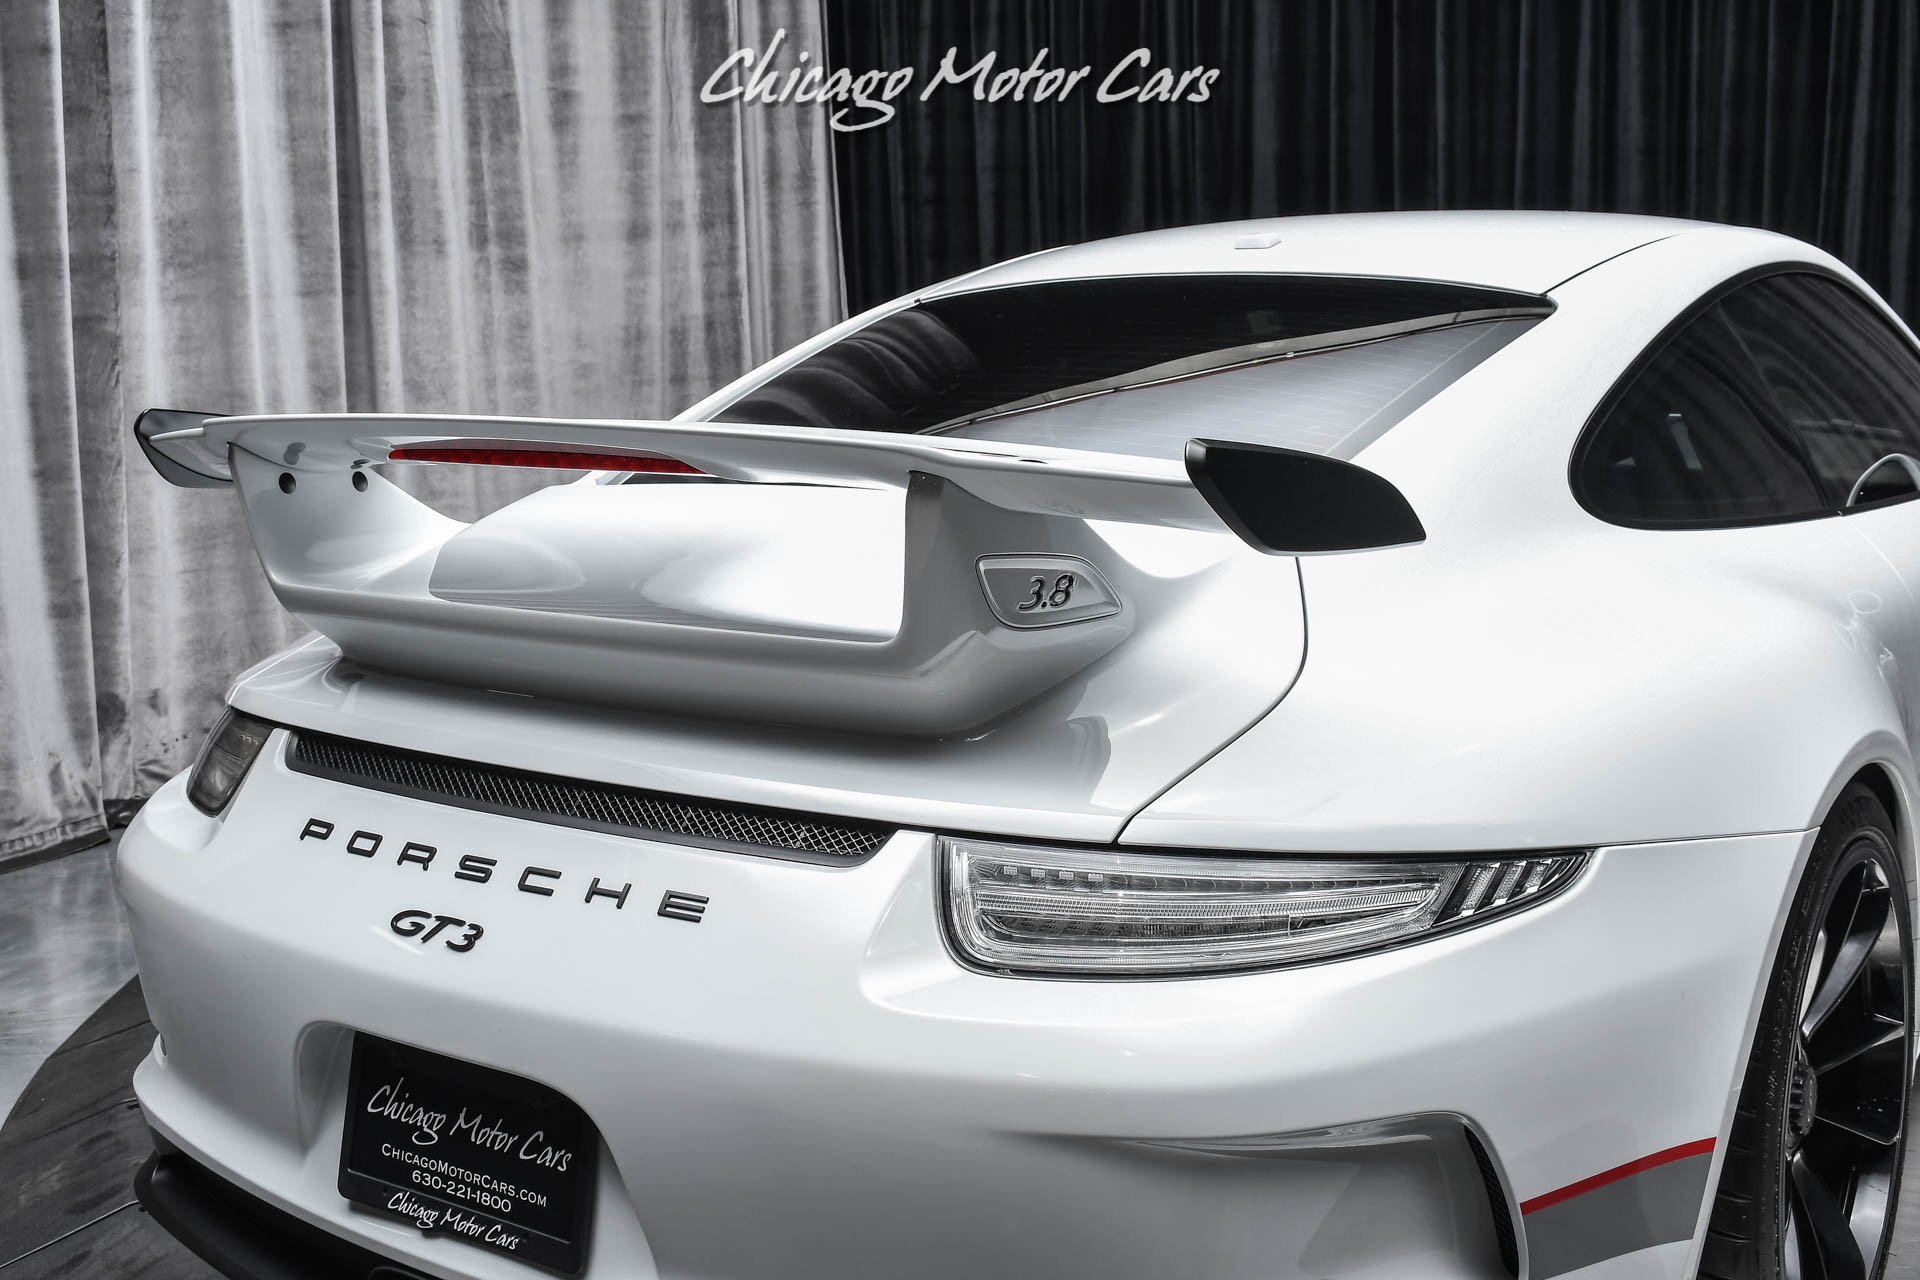 Used-2015-Porsche-911-GT3-LIGHT-WEIGHT-BUCKET-SEATS-SPORT-CHRONO-PACKAGE-PDLS